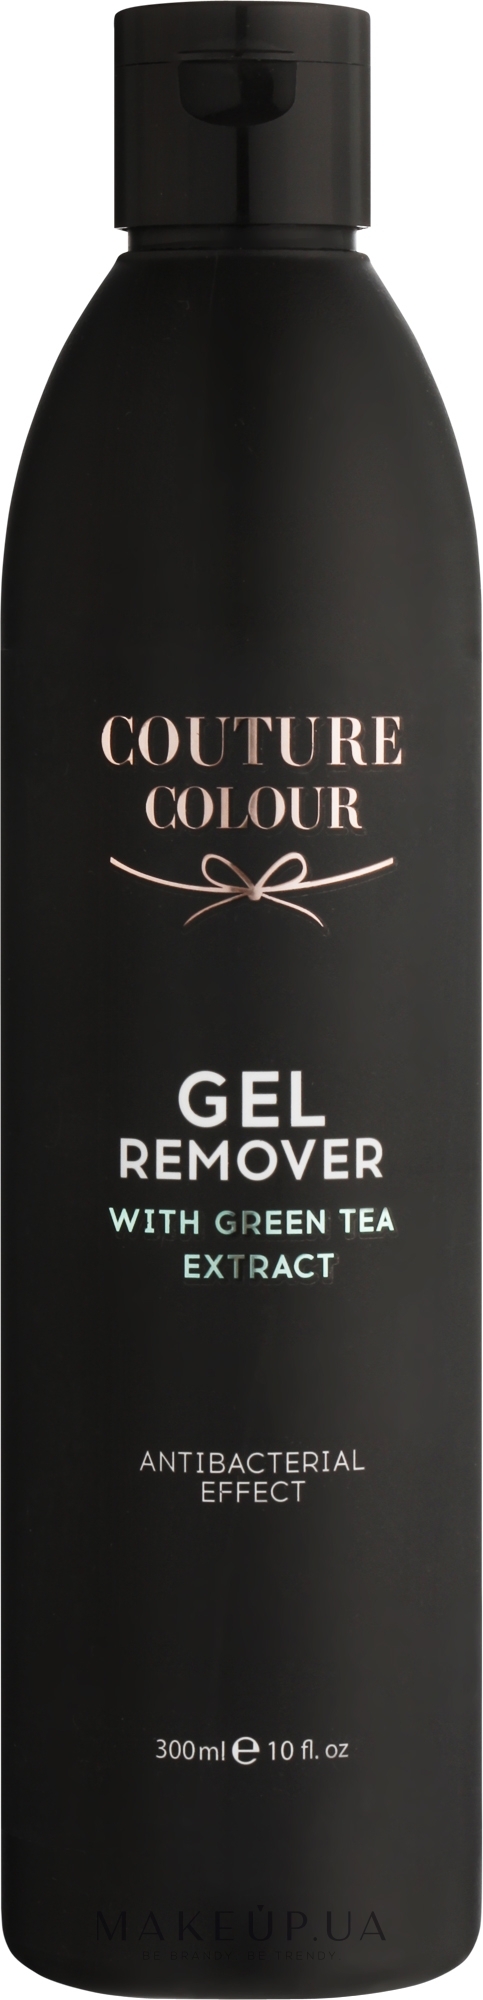 Засіб для видалення гелю та гель-лаку з екстрактом зеленого чаю - Couture Colour Gel Remover with Green Tea Extract — фото 300ml